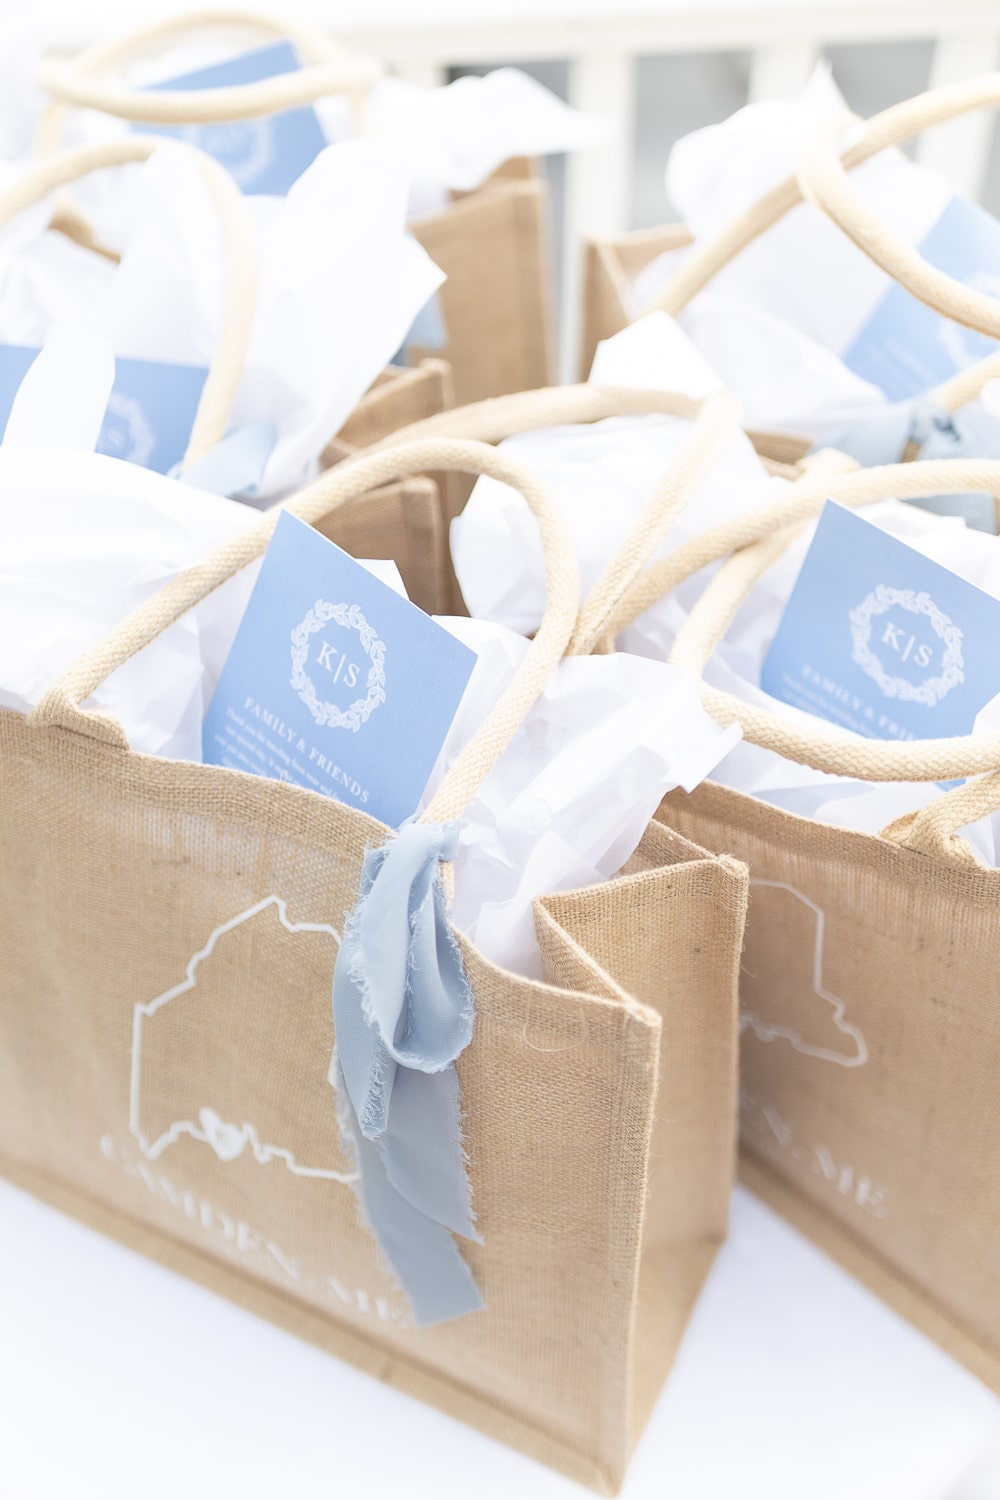 Maine wedding welcome bag ideas from DIY blogger Stephanie Ziajka on Diary of a Debutante